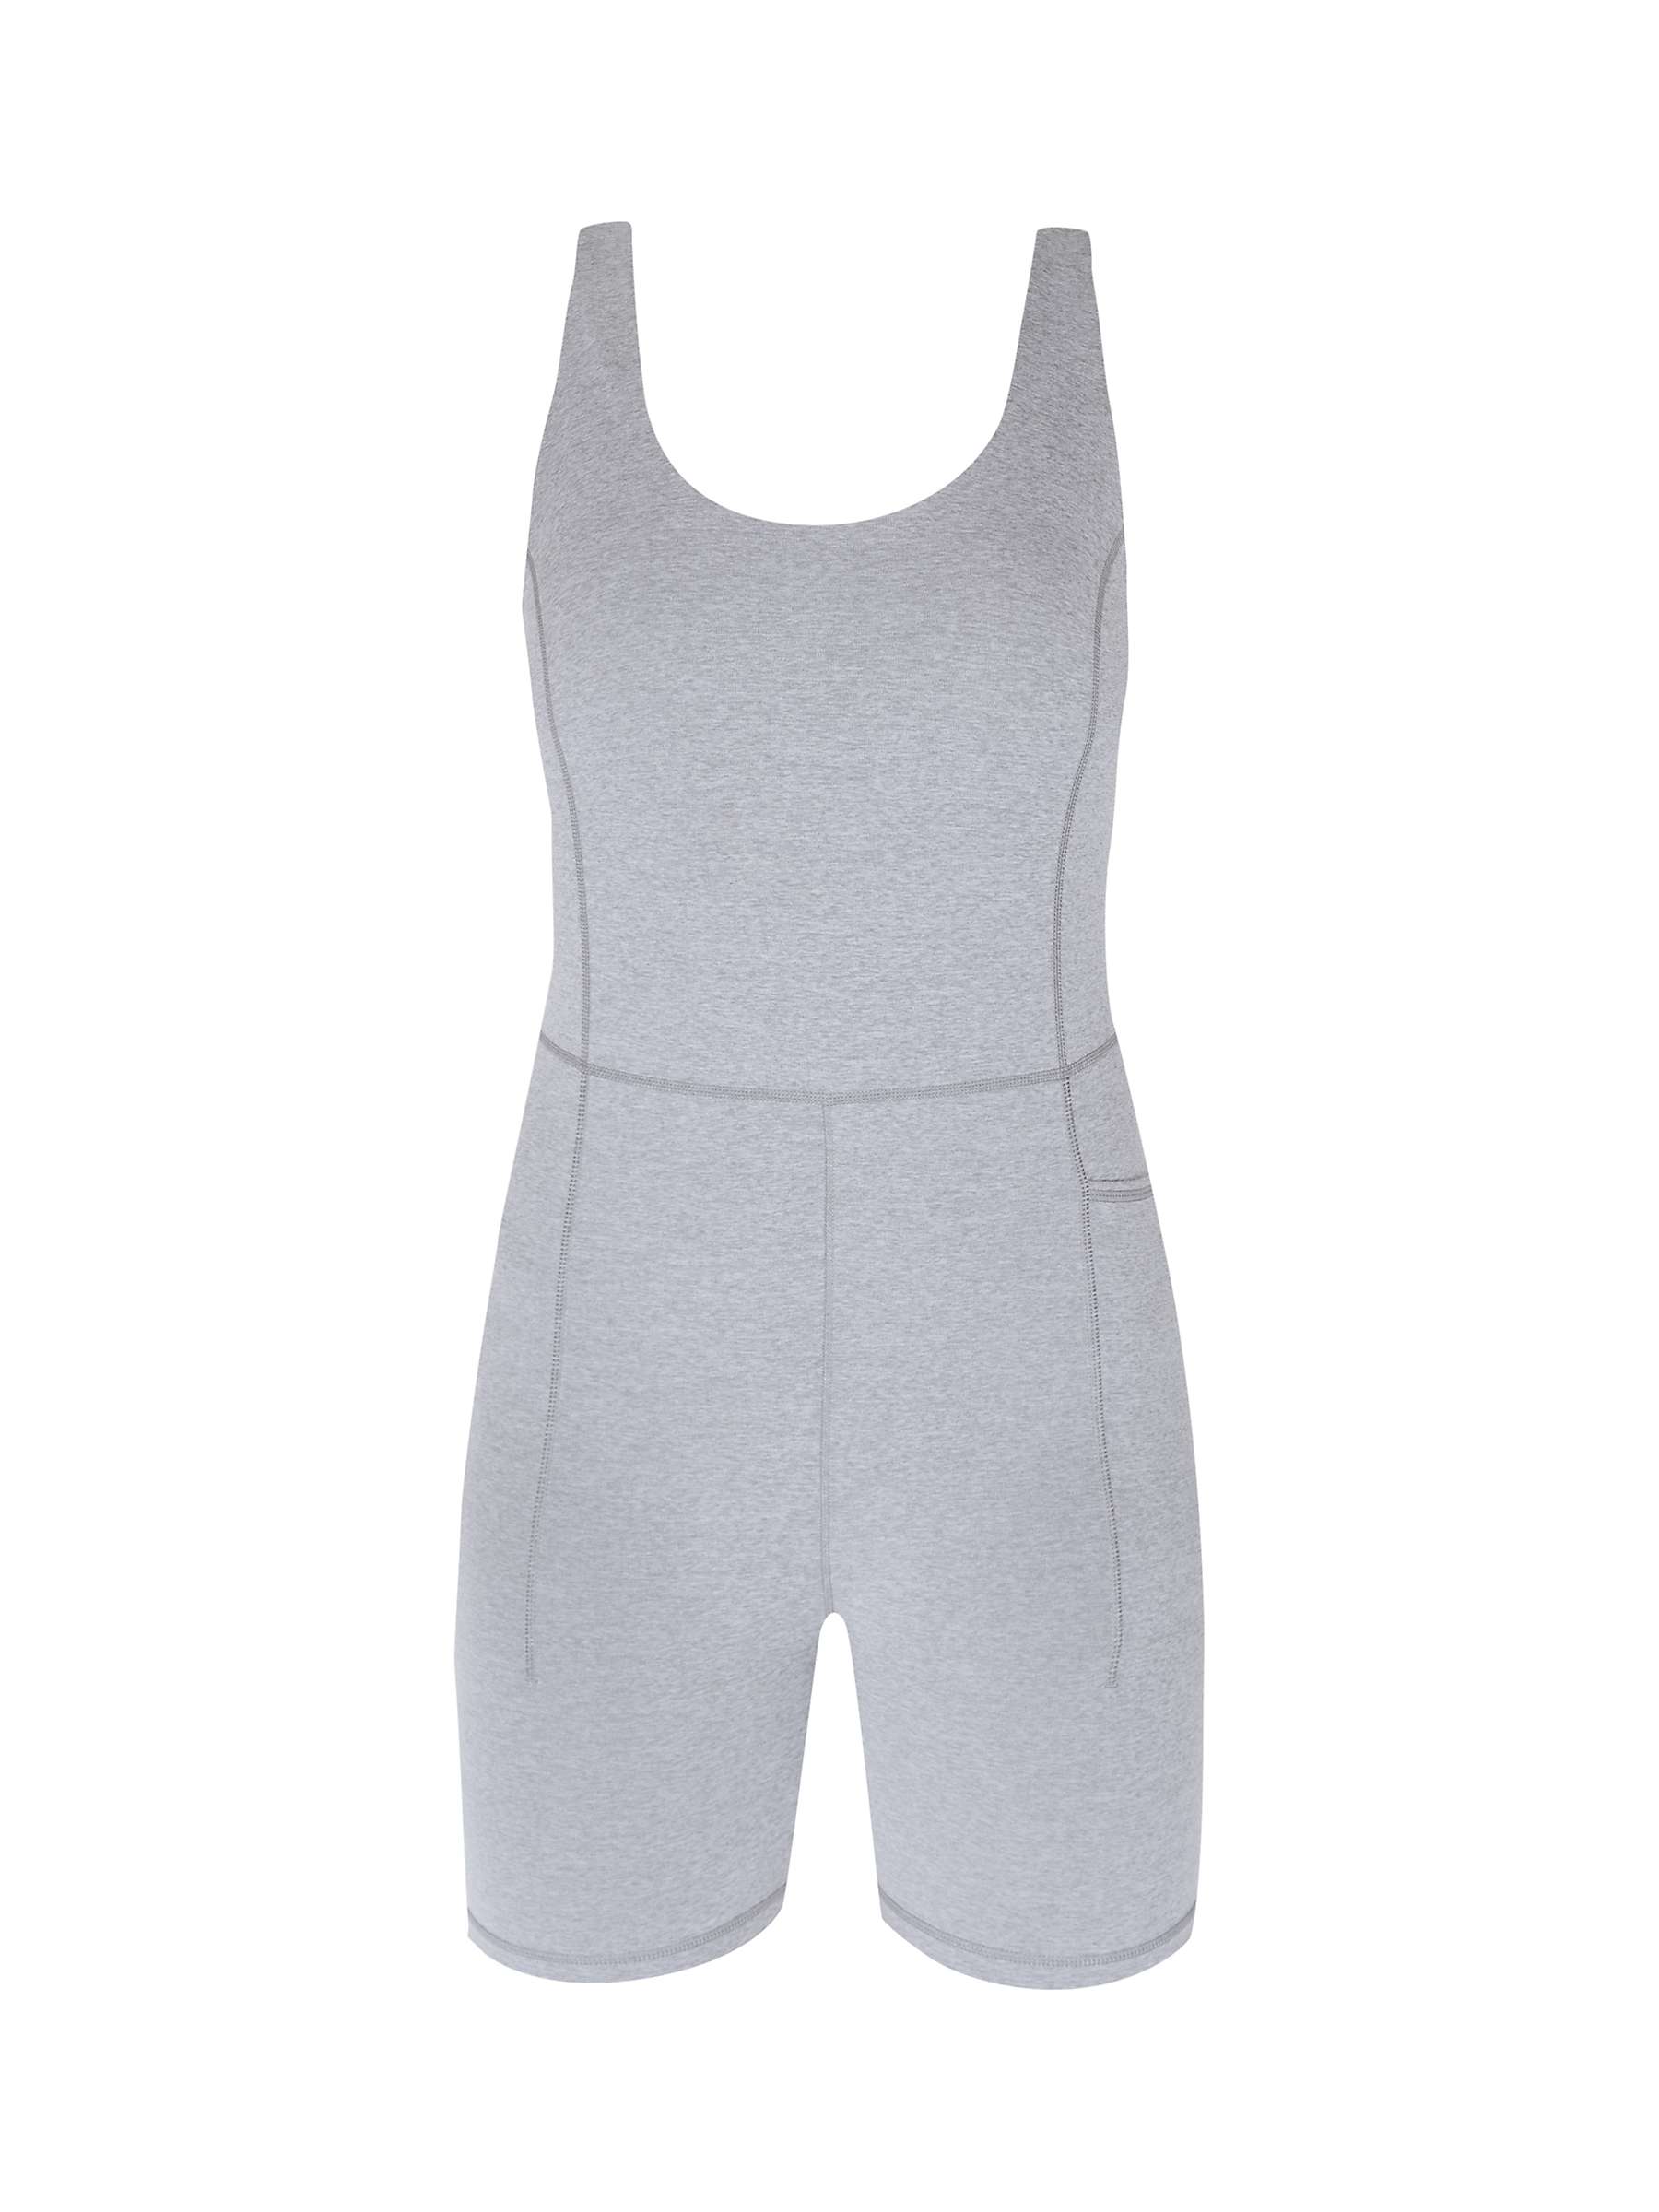 Buy Sweaty Betty Super Soft Bodysuit, Medium Grey Marl Online at johnlewis.com